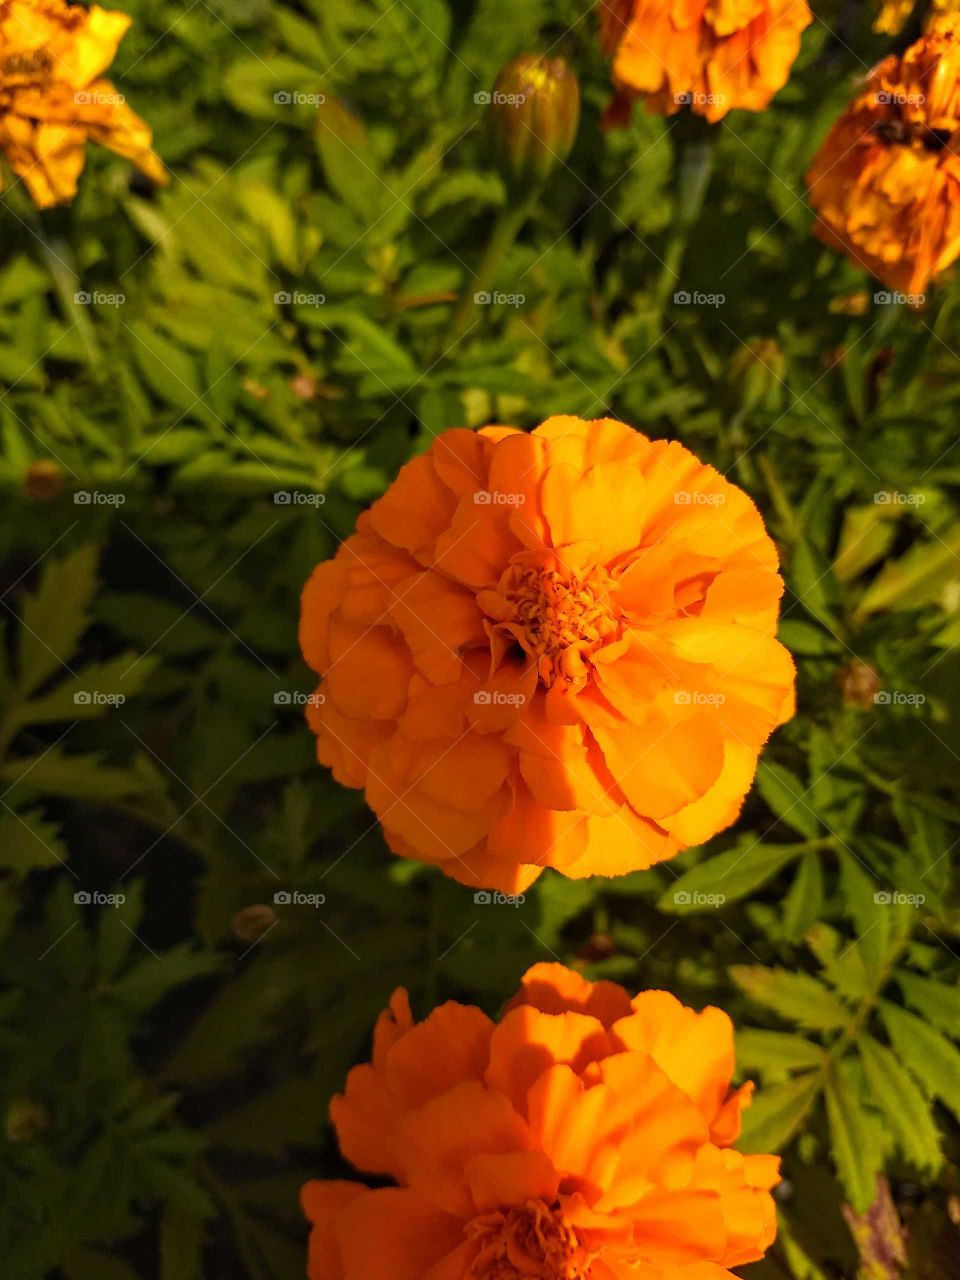 Orange flower with sun on half of it
sunlight shadow focused green orange